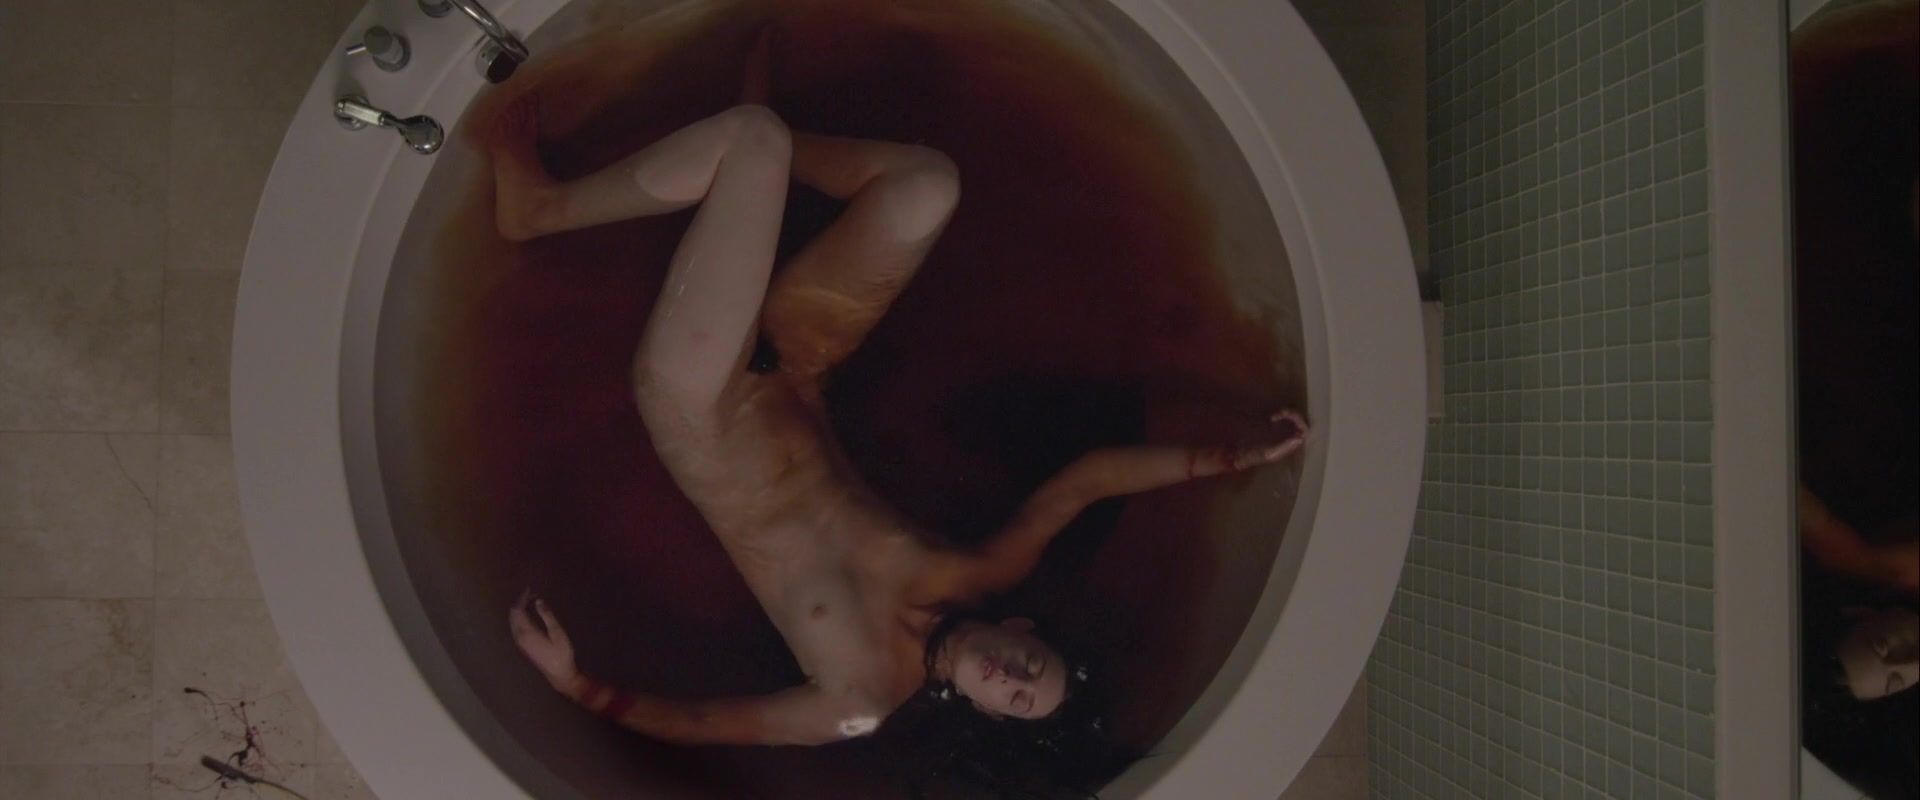 Dick Sucking Shaving legs and a nude scene in the bathroom with topless celebrity Sara Malakul of the movie "Sun Choke" TuKif